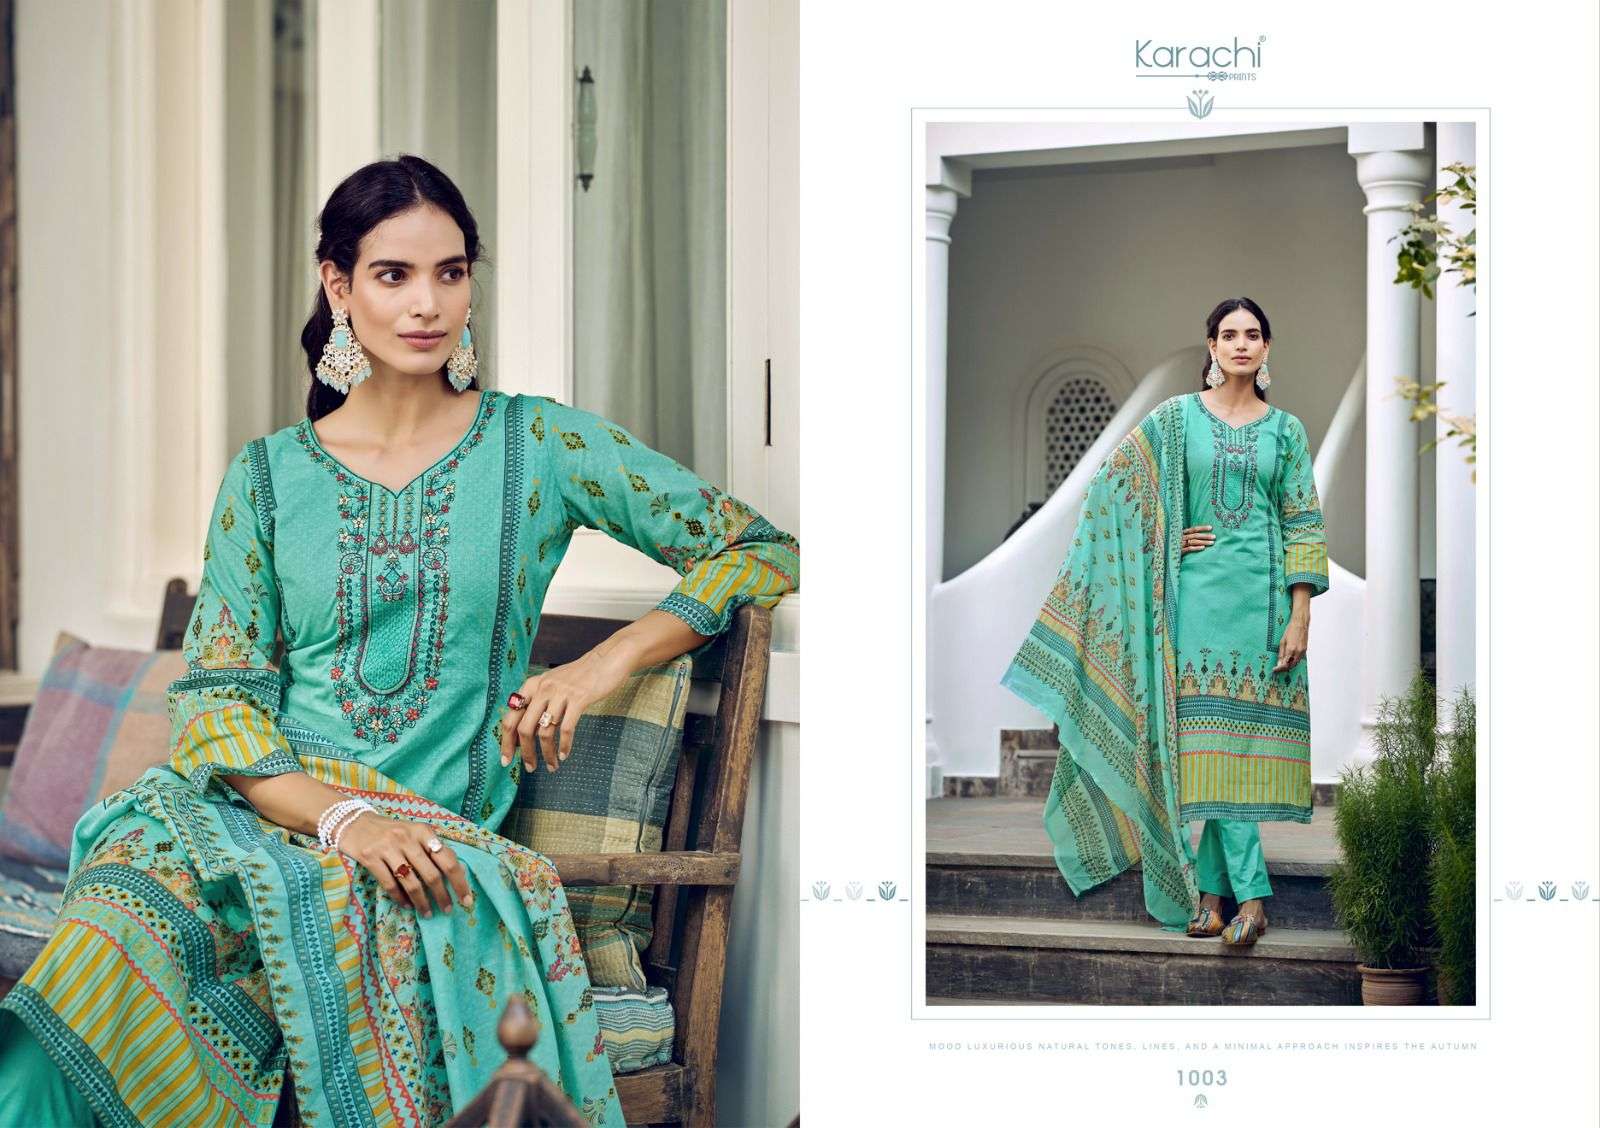 karachi azalea 1001-1008 series designer fancy straight cut salwar suit wholesaler surat gujarat